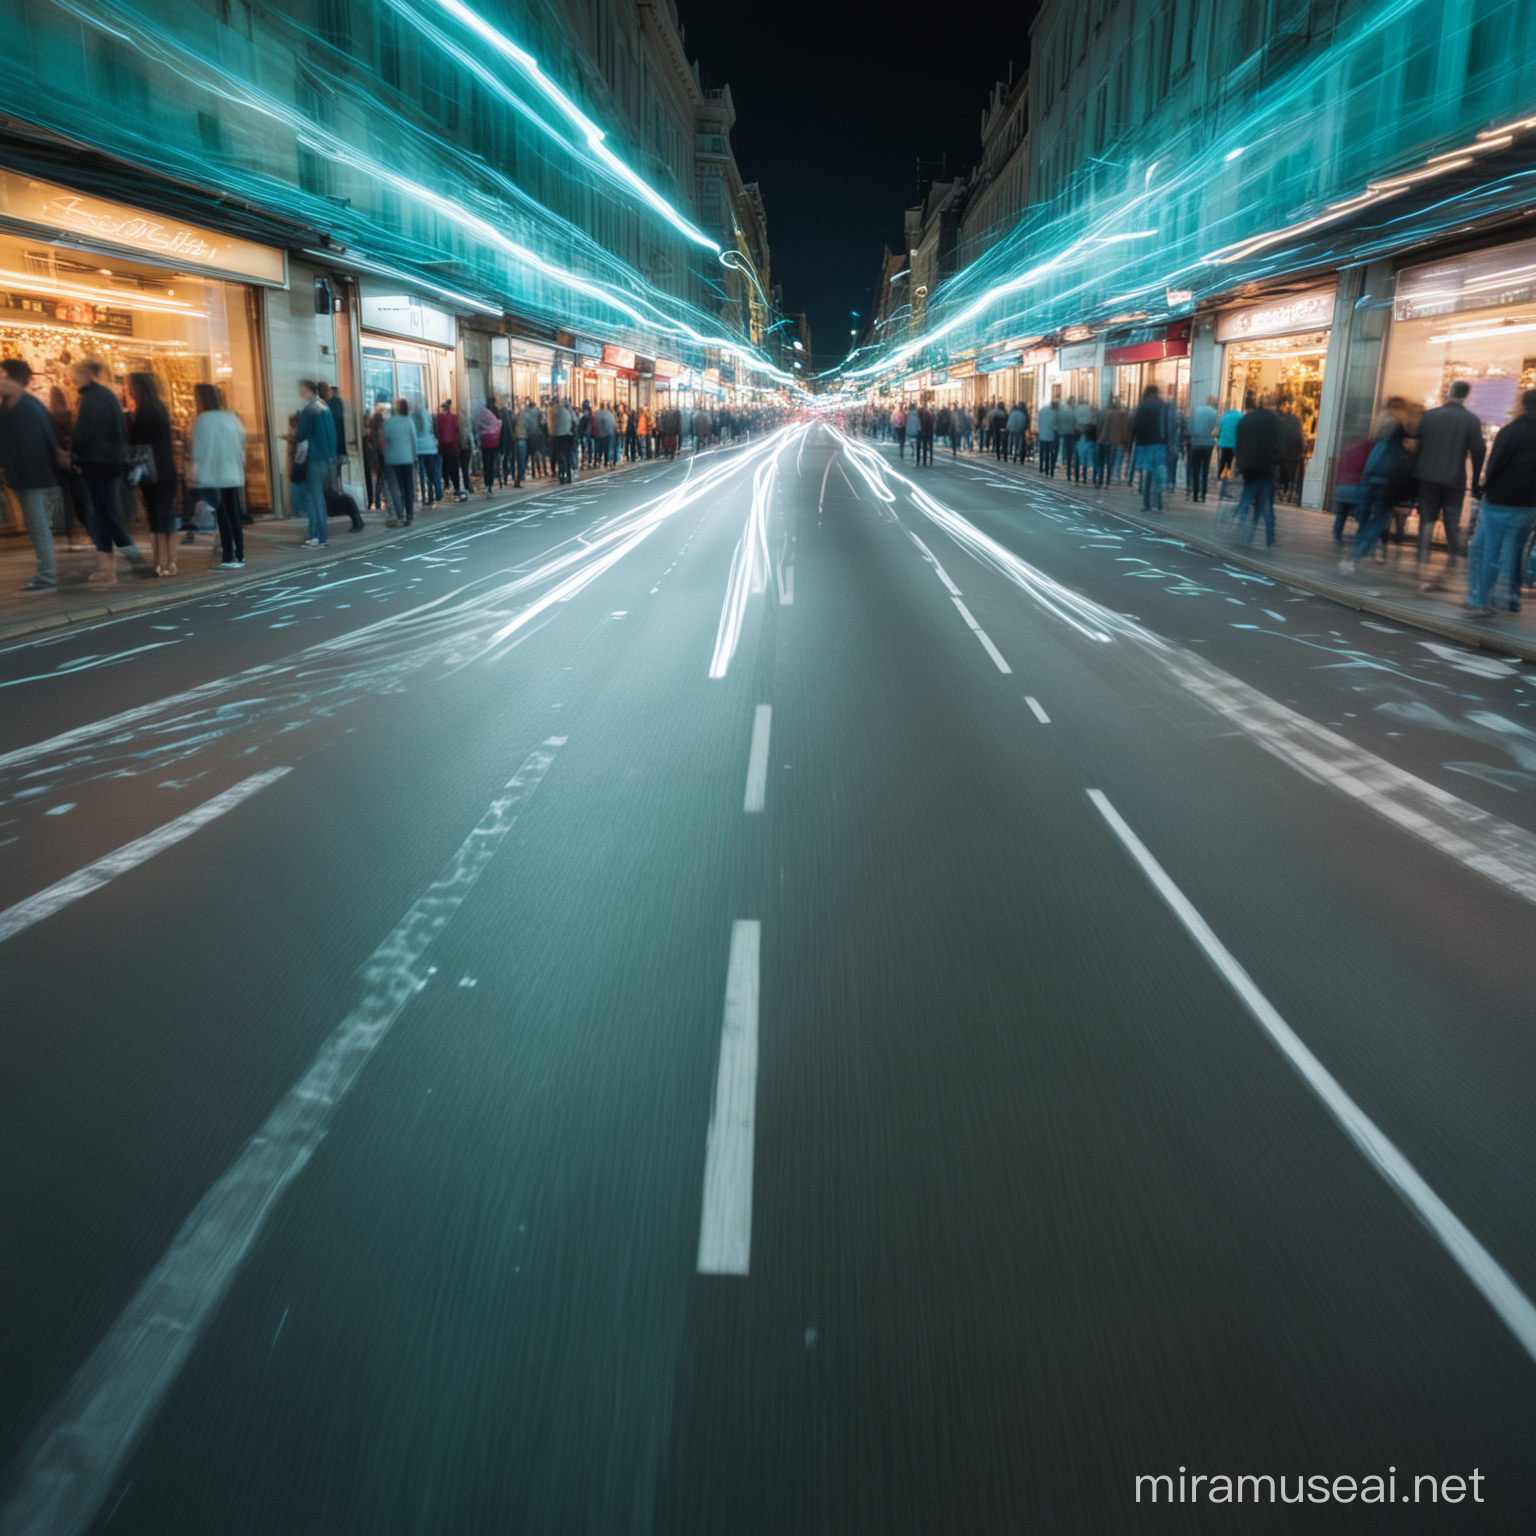 crowded street, motion blur, long shutter, photograph, night, turquoise lighting